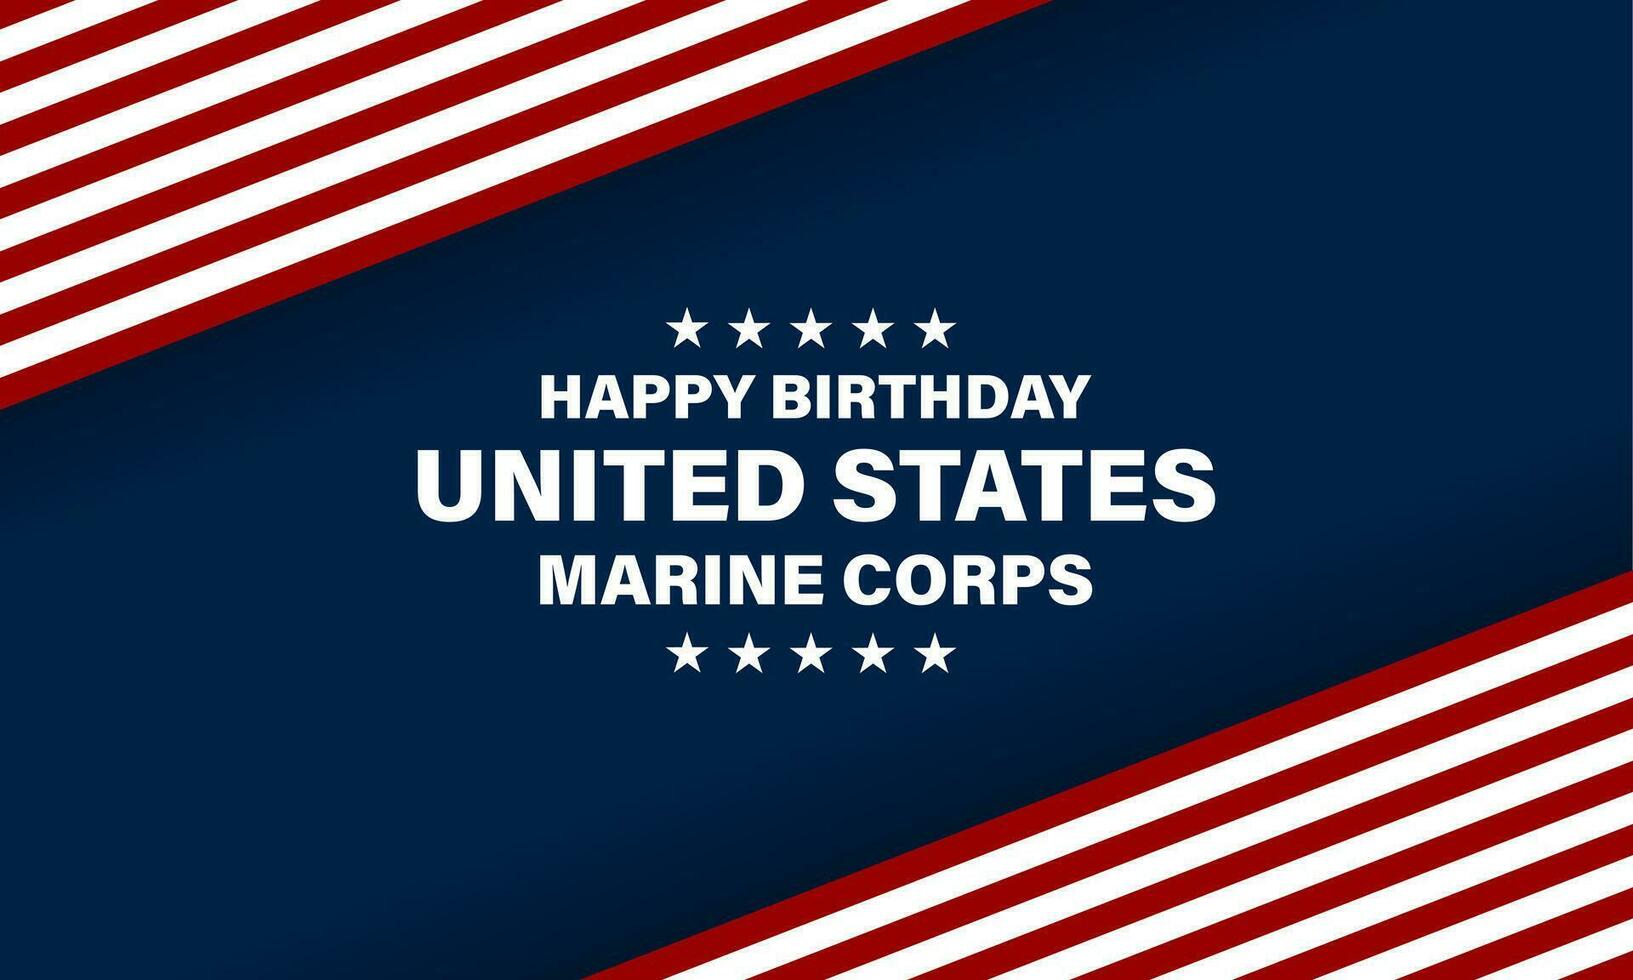 US Marine Corps Birthday November 10 Background Vector Illustration